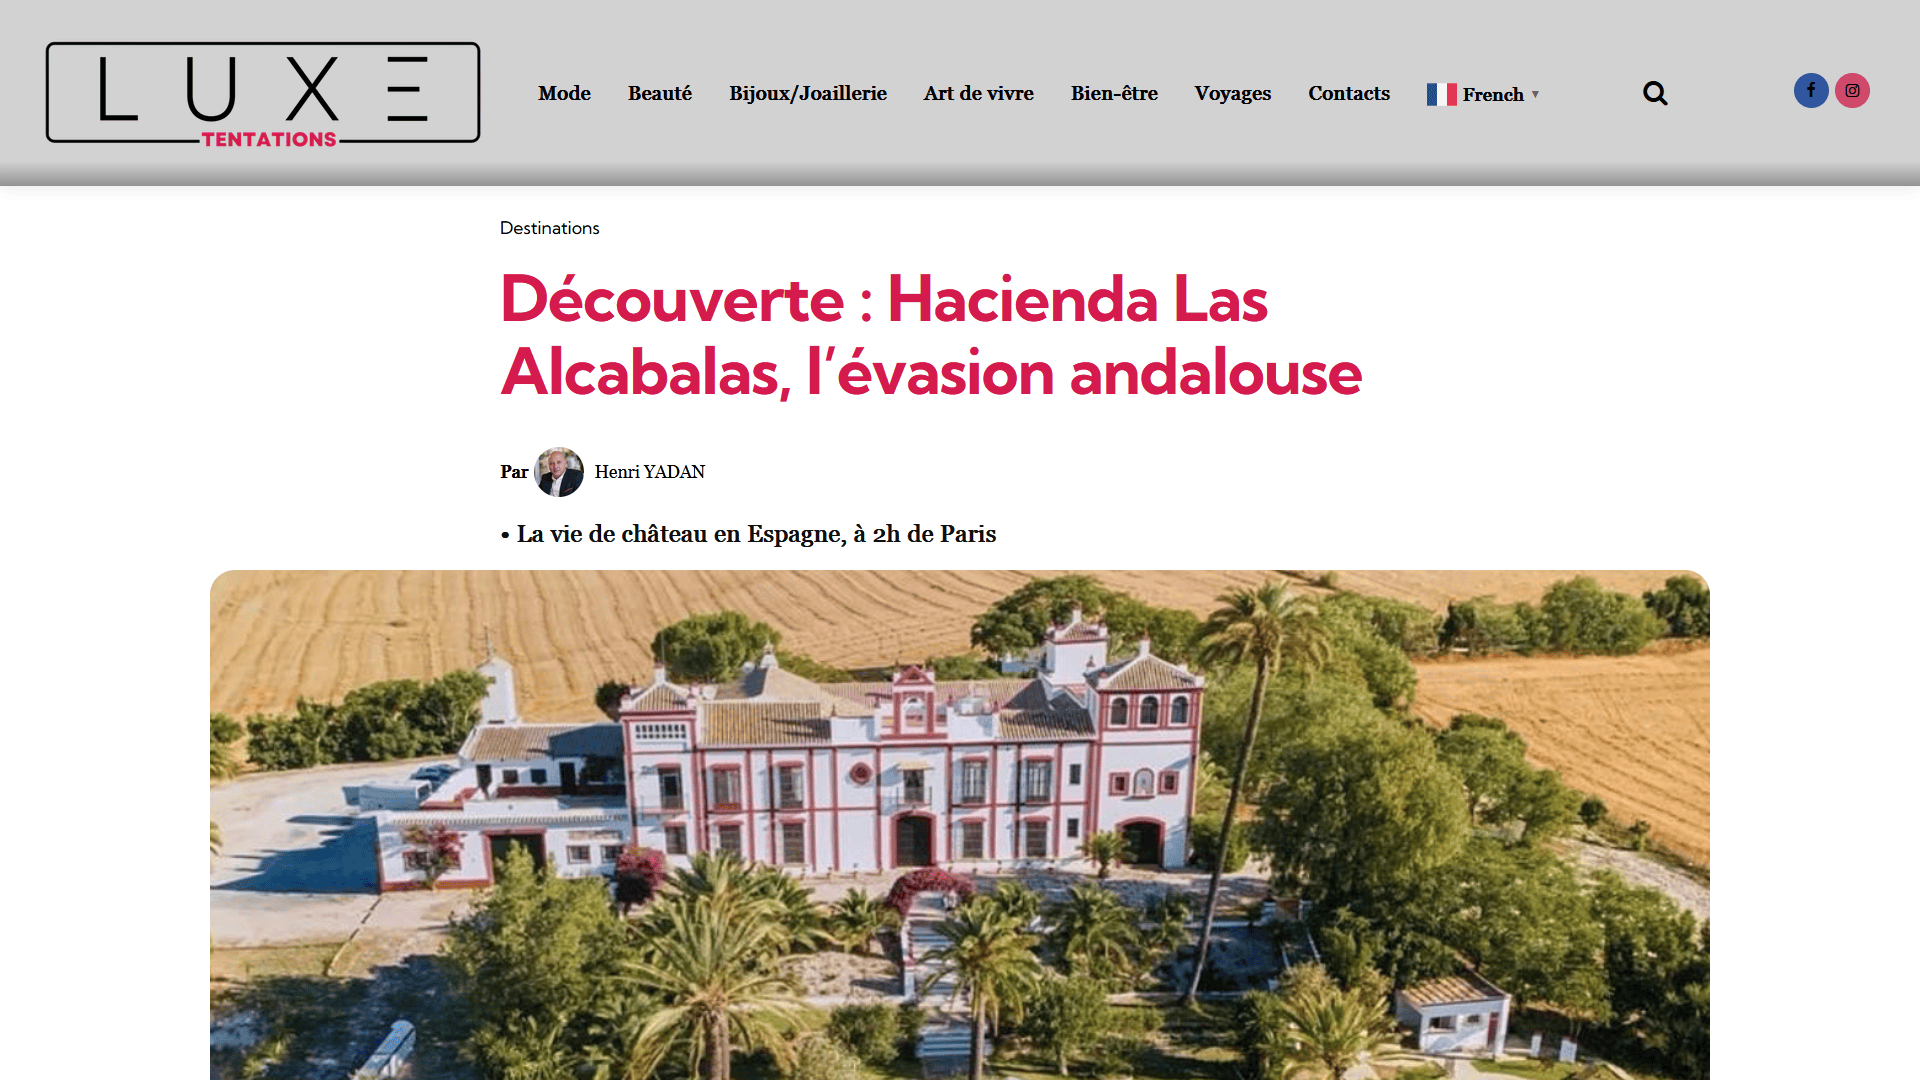 Article-Luxe-tentations-Decouverte-Hacienda-Las-Alcabalas-levasion-andalouse